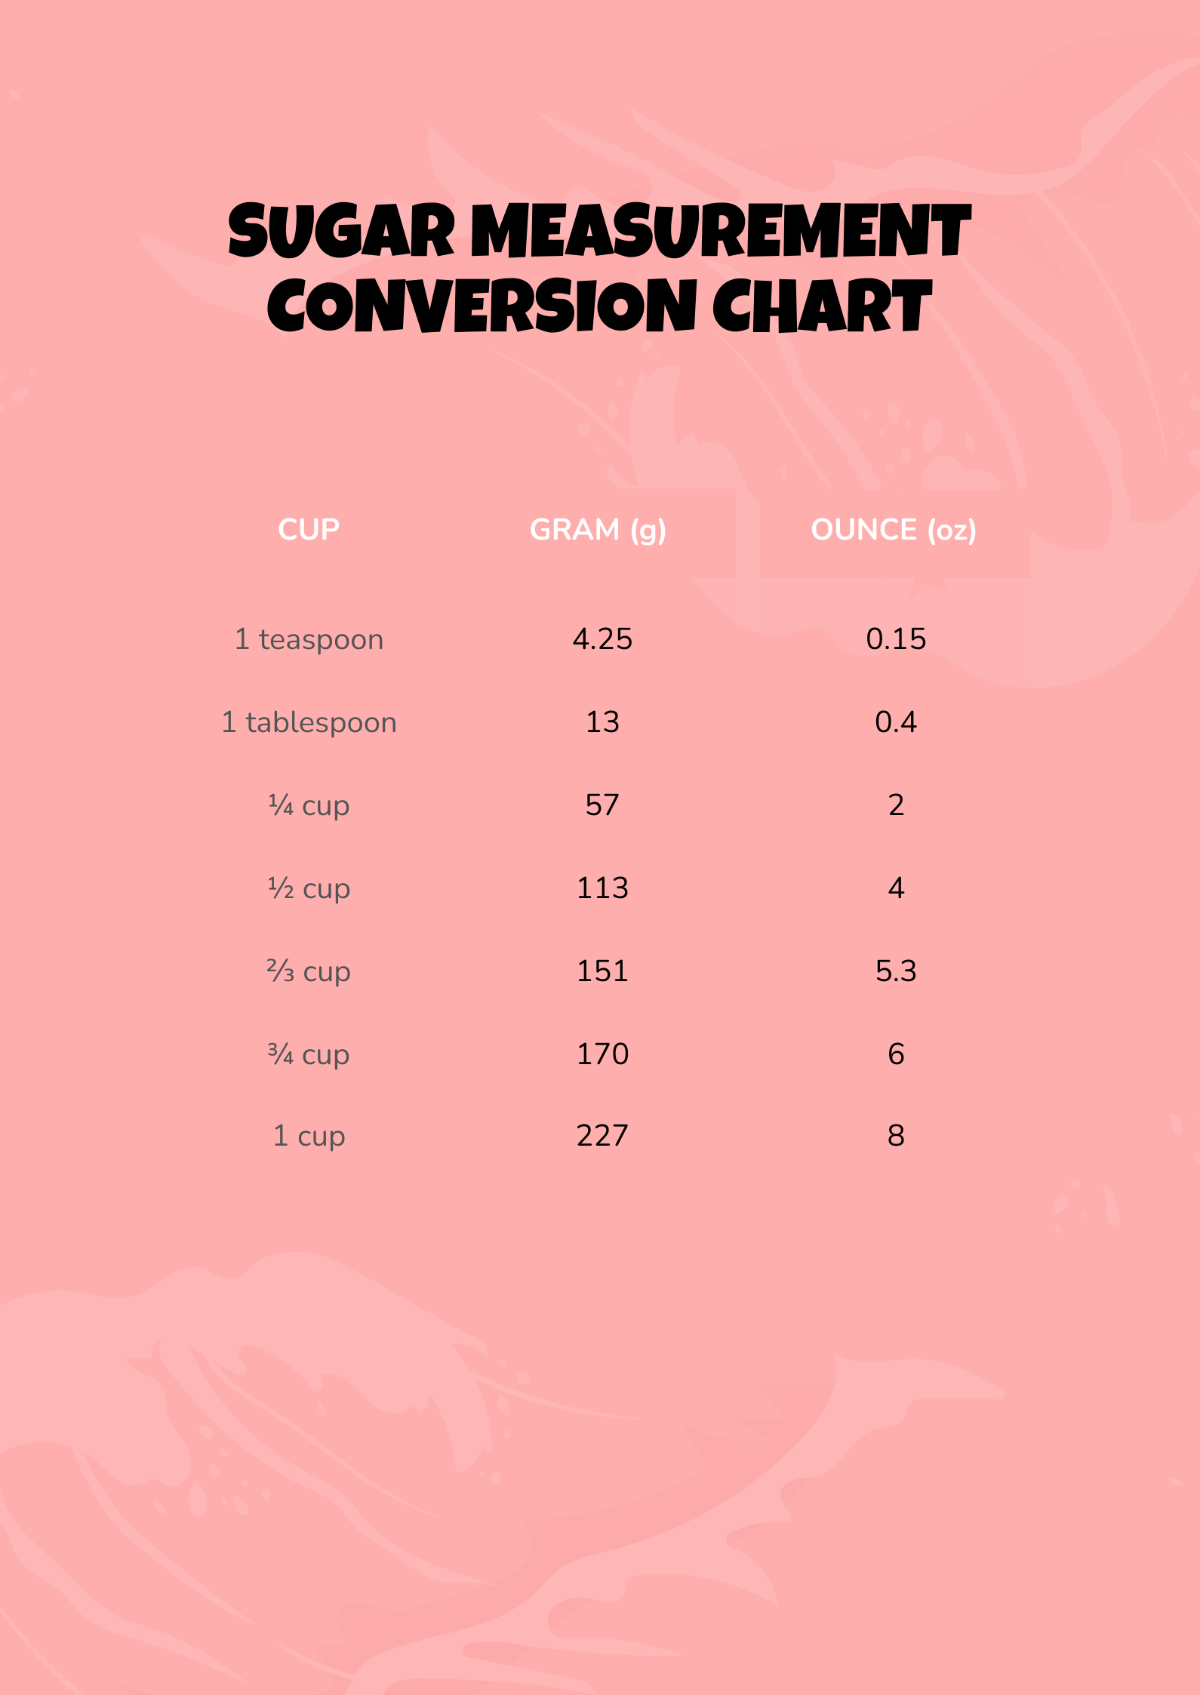 Sugar Measurement Conversion Chart Template